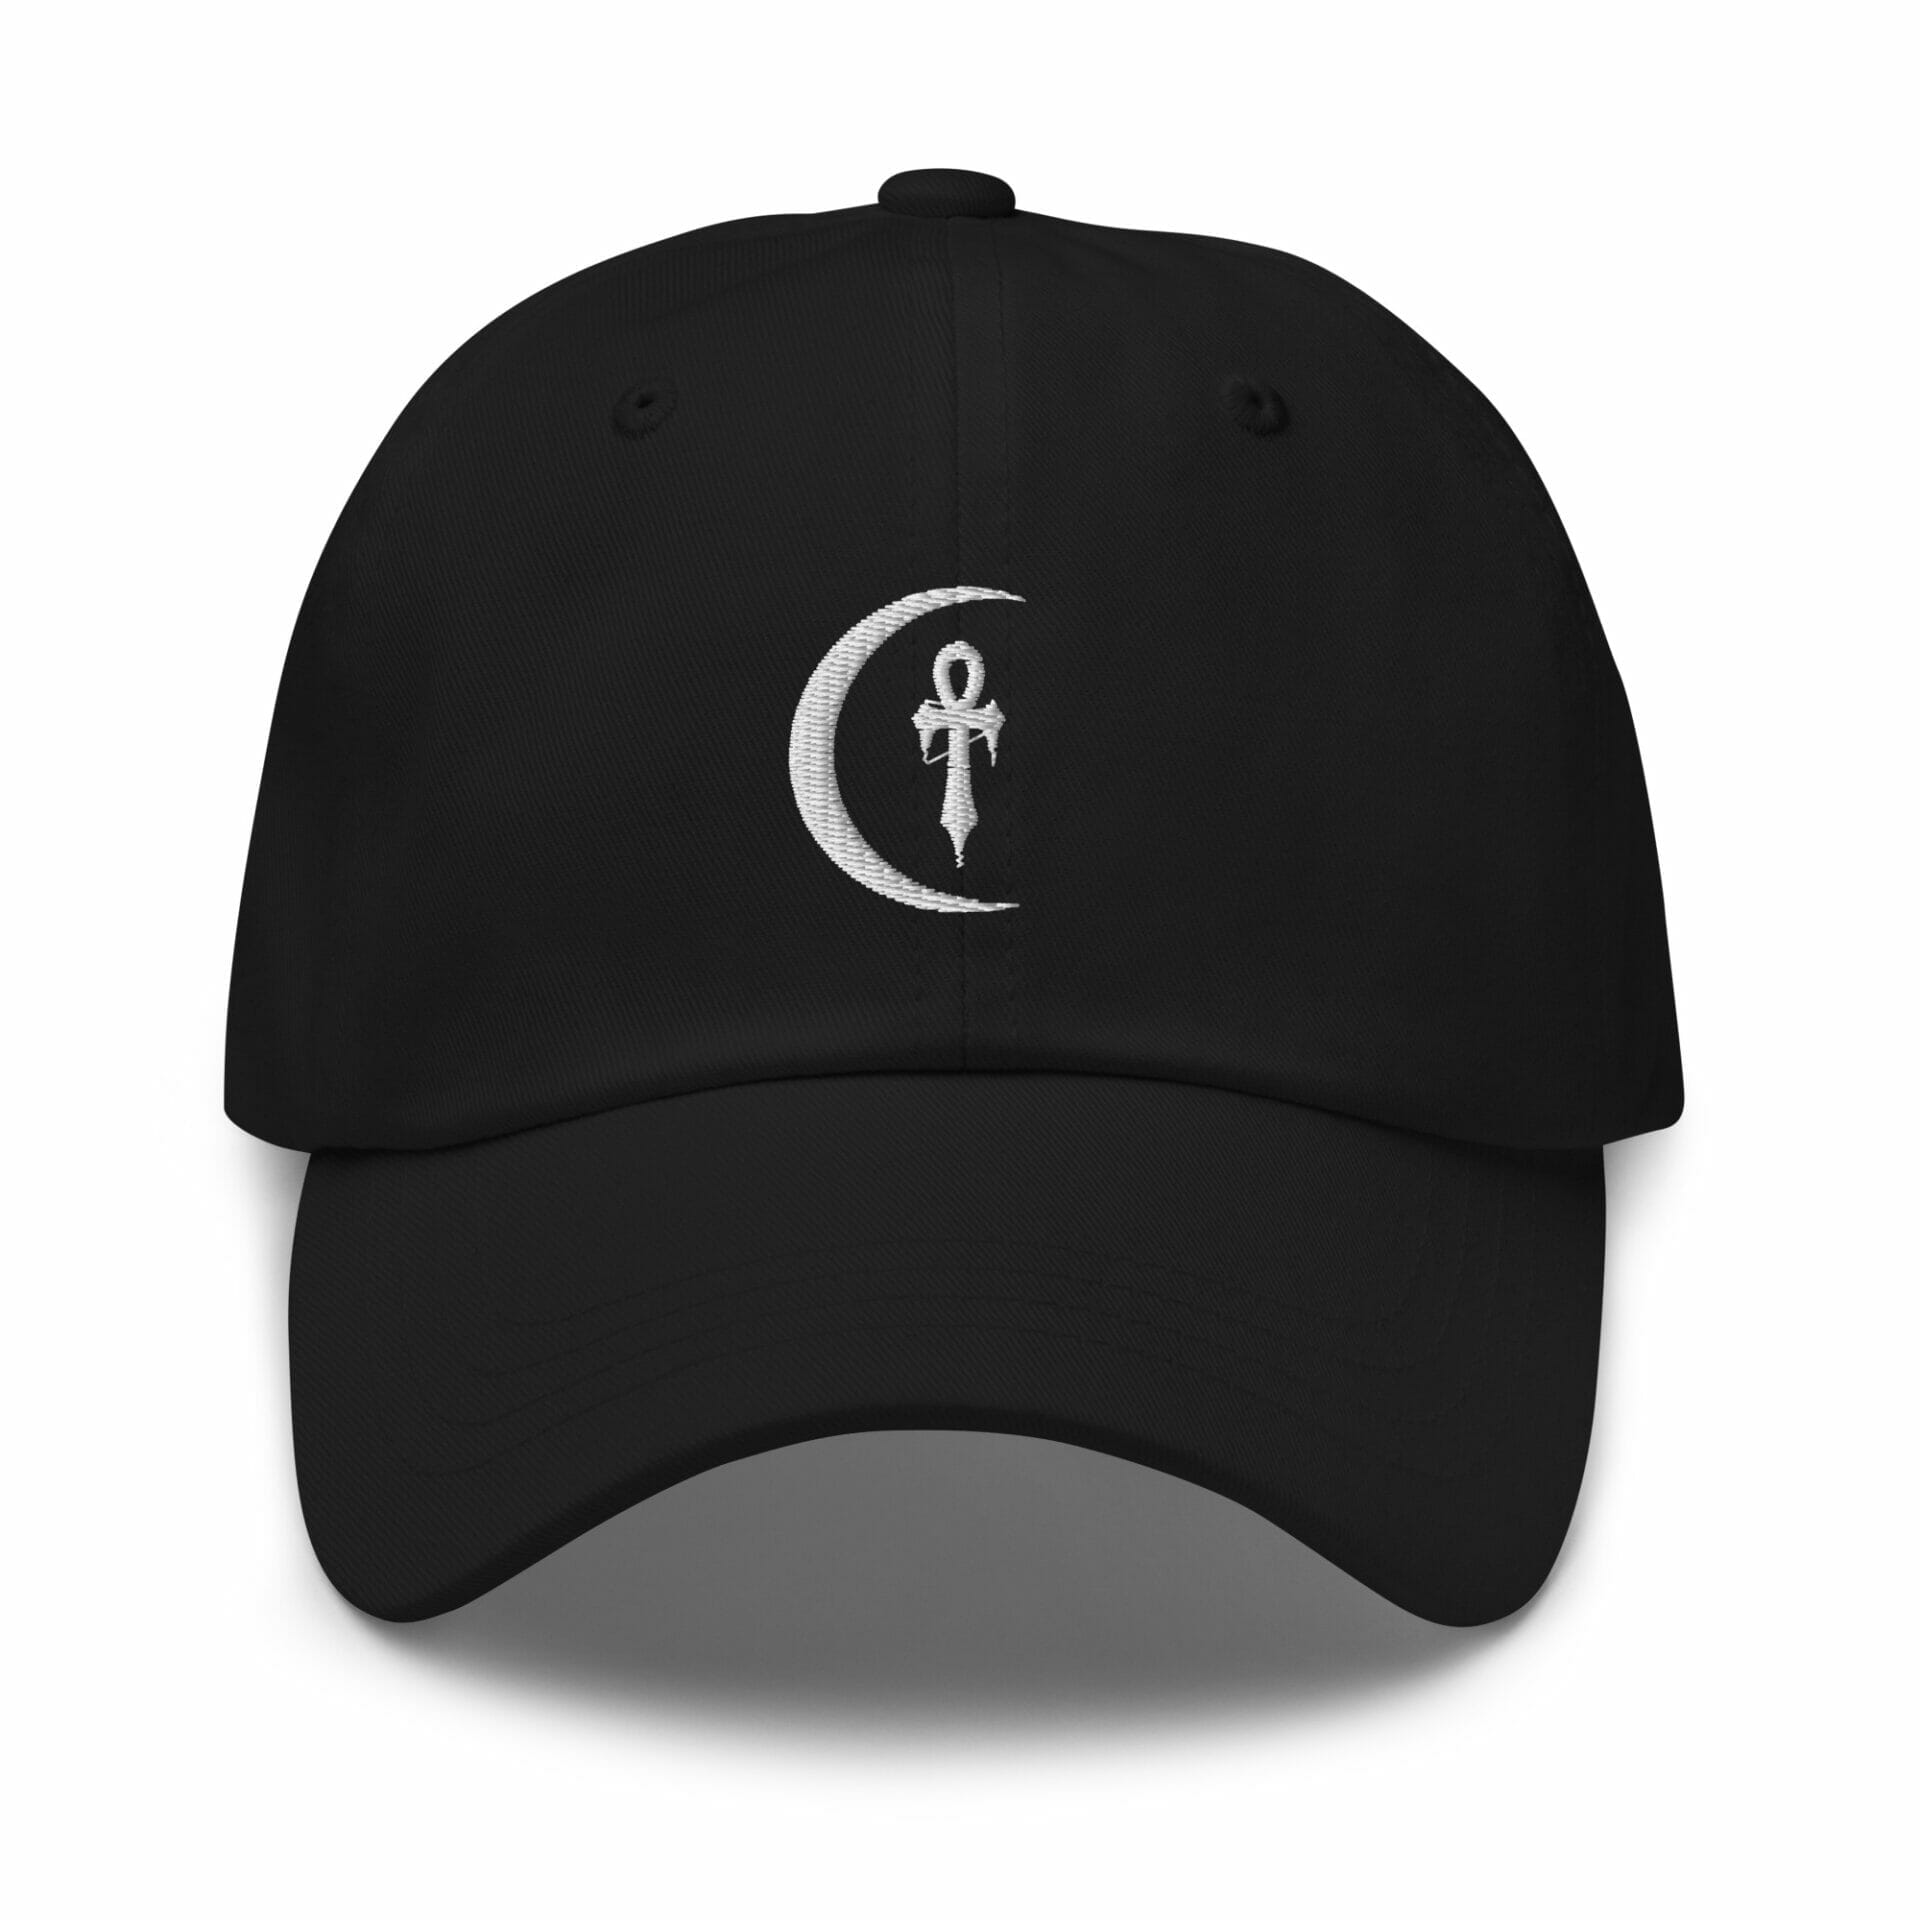 classic-dad-hat-black-front-6495dac254e0b